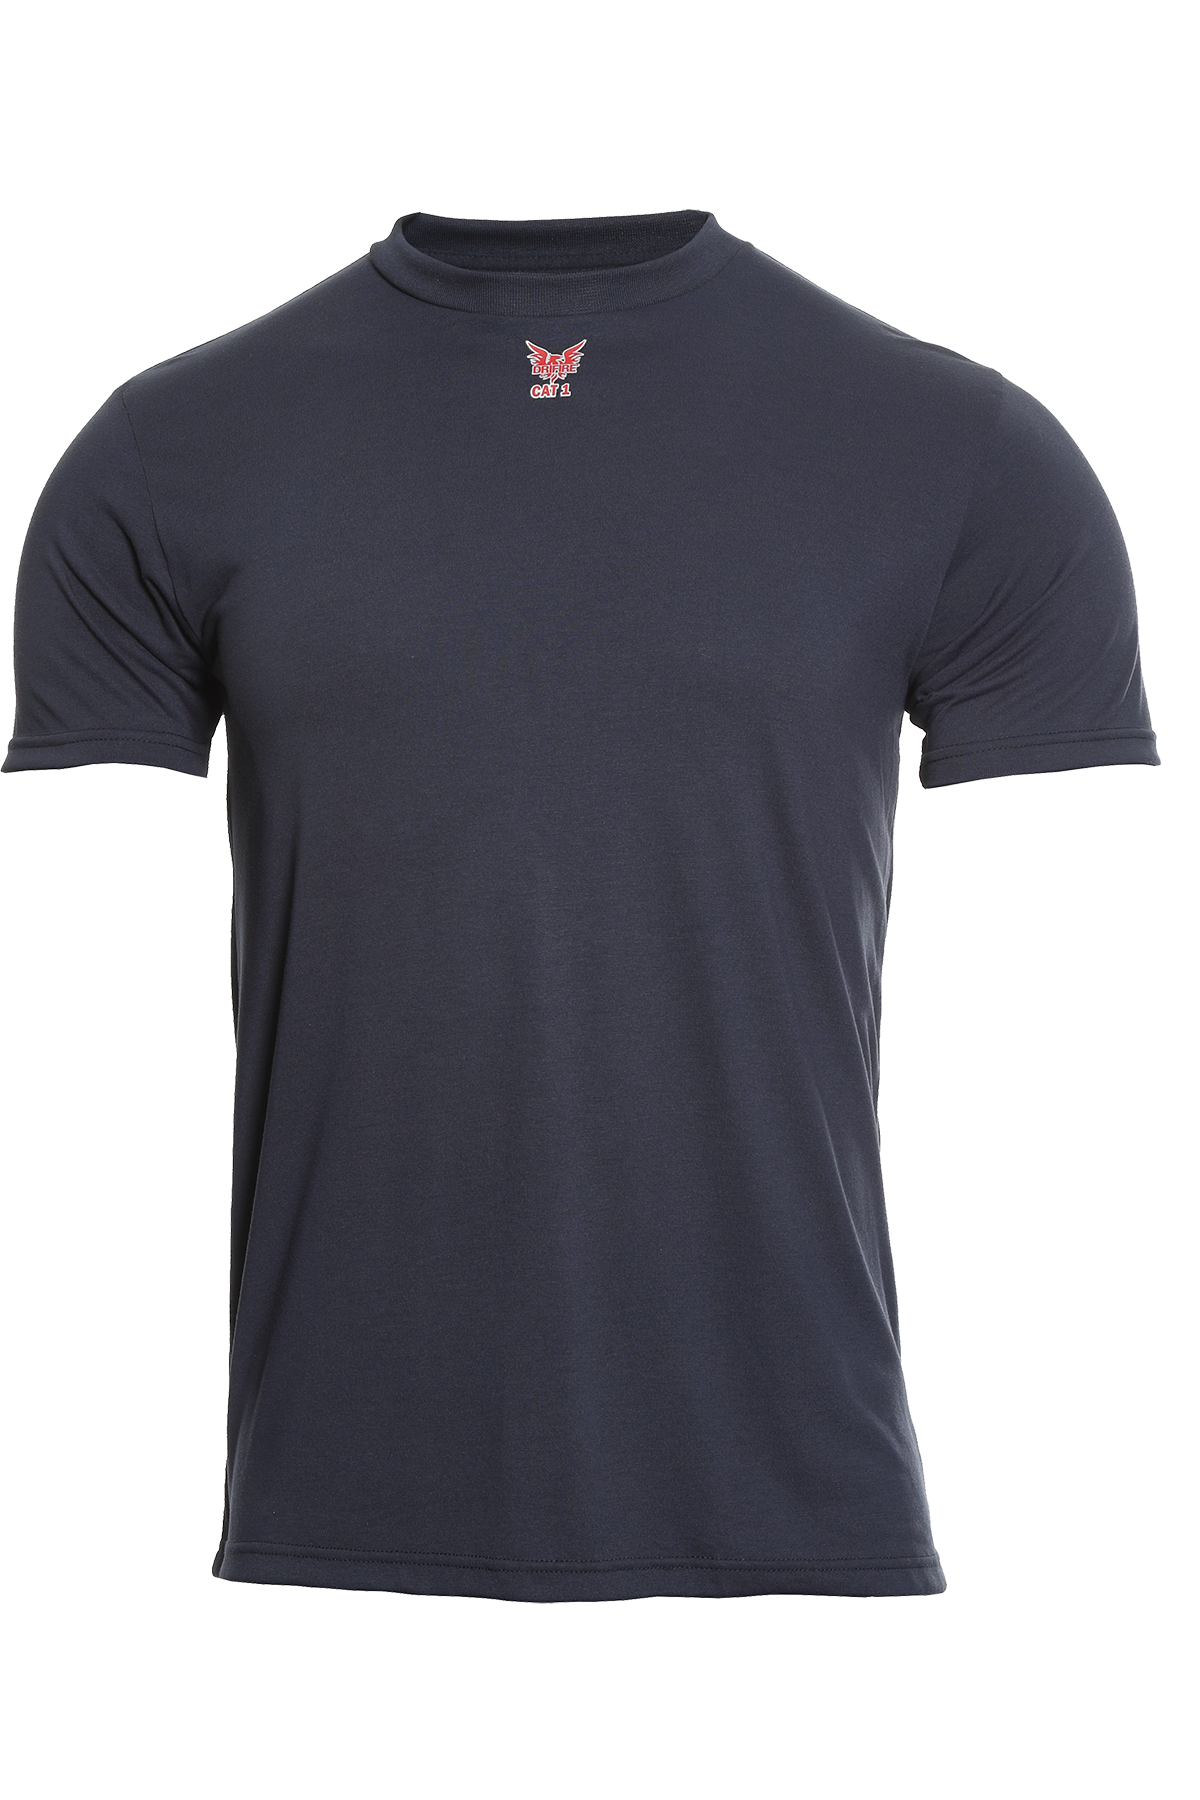 NSA DriFire Lightweight Short Sleeve T-Shirt - DF2-CM-446TS-NB-L